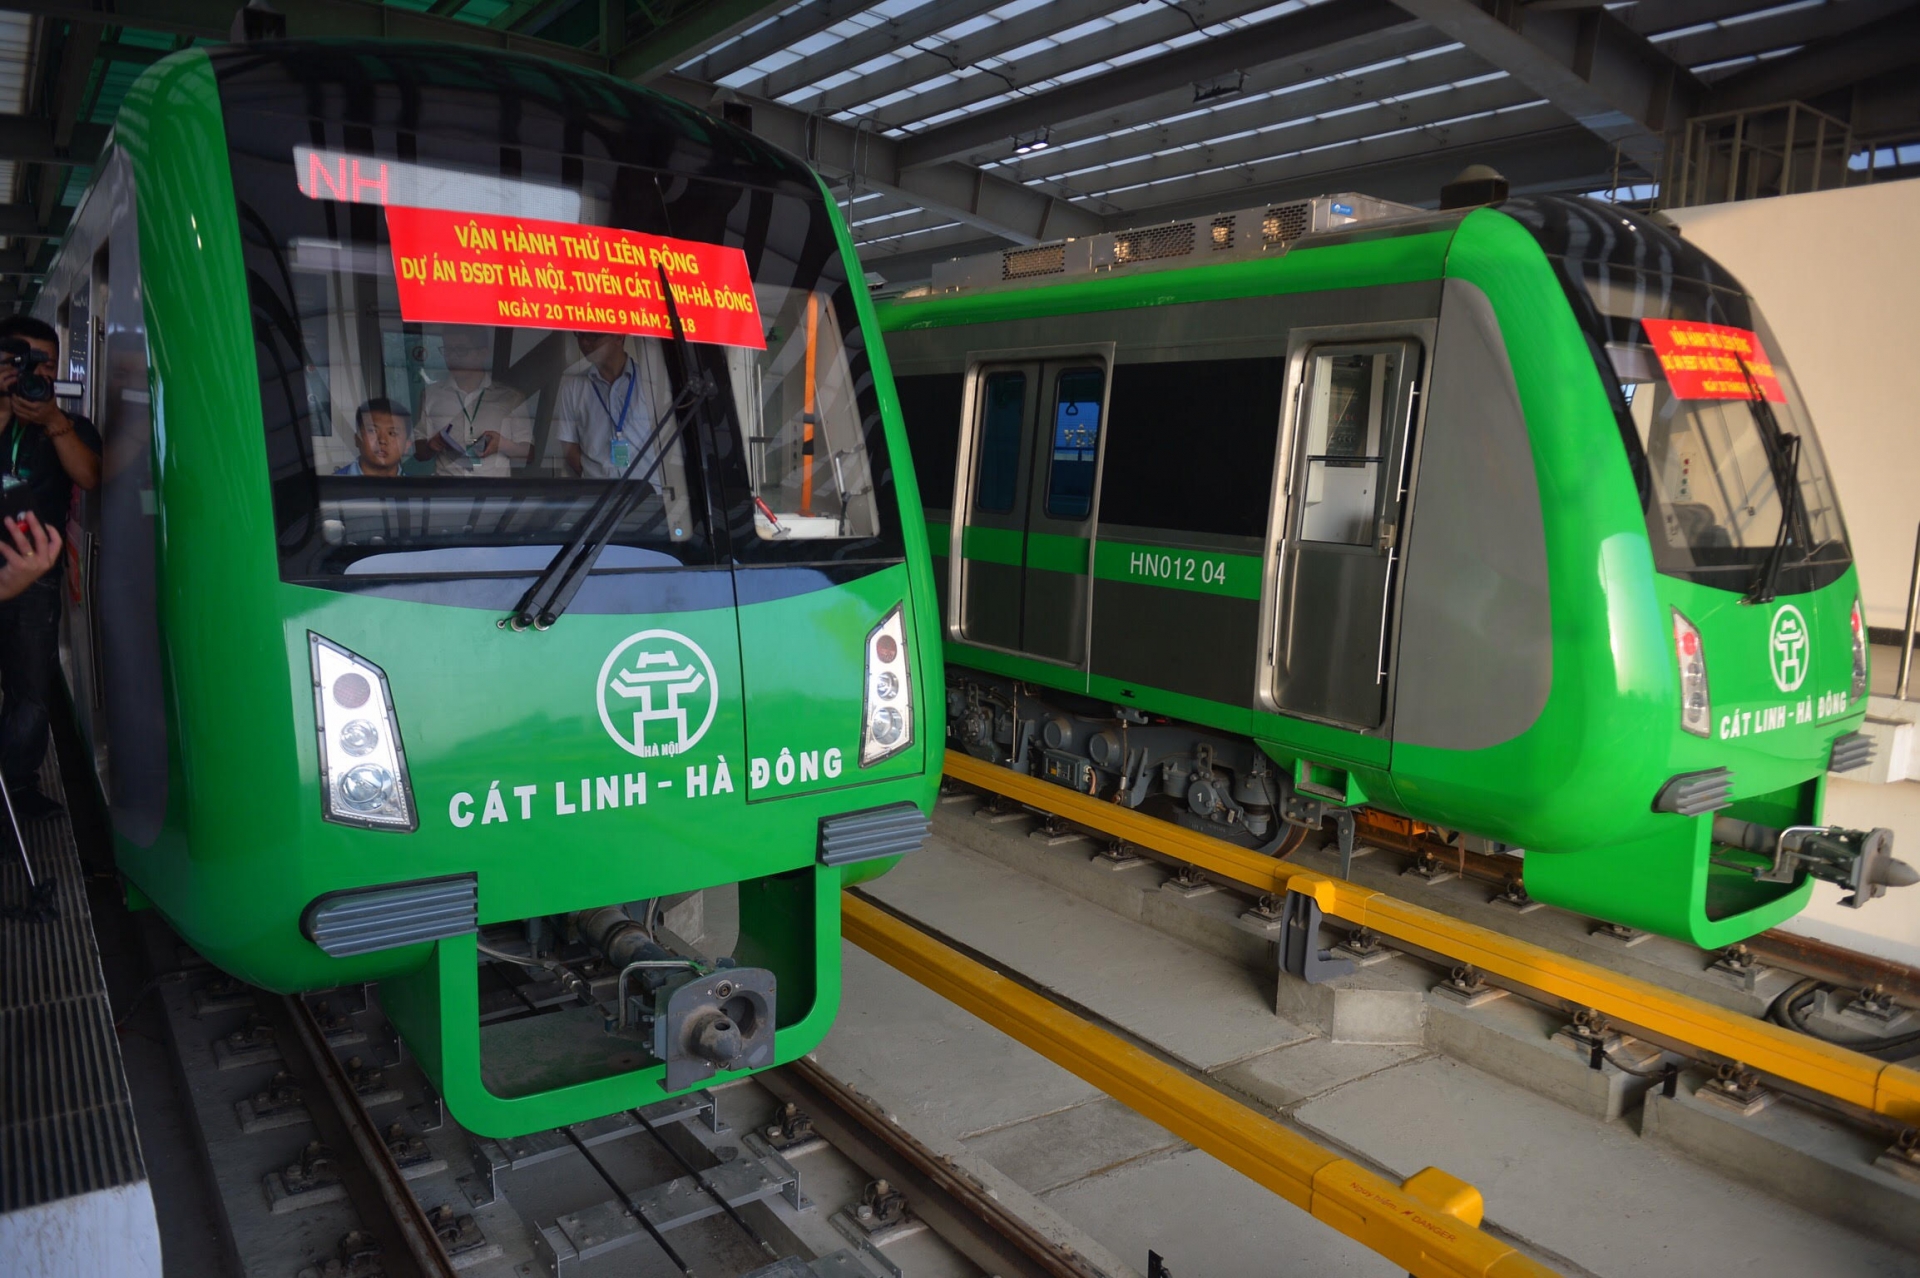 Cat Linh-Hadong elevated urban railway first test run